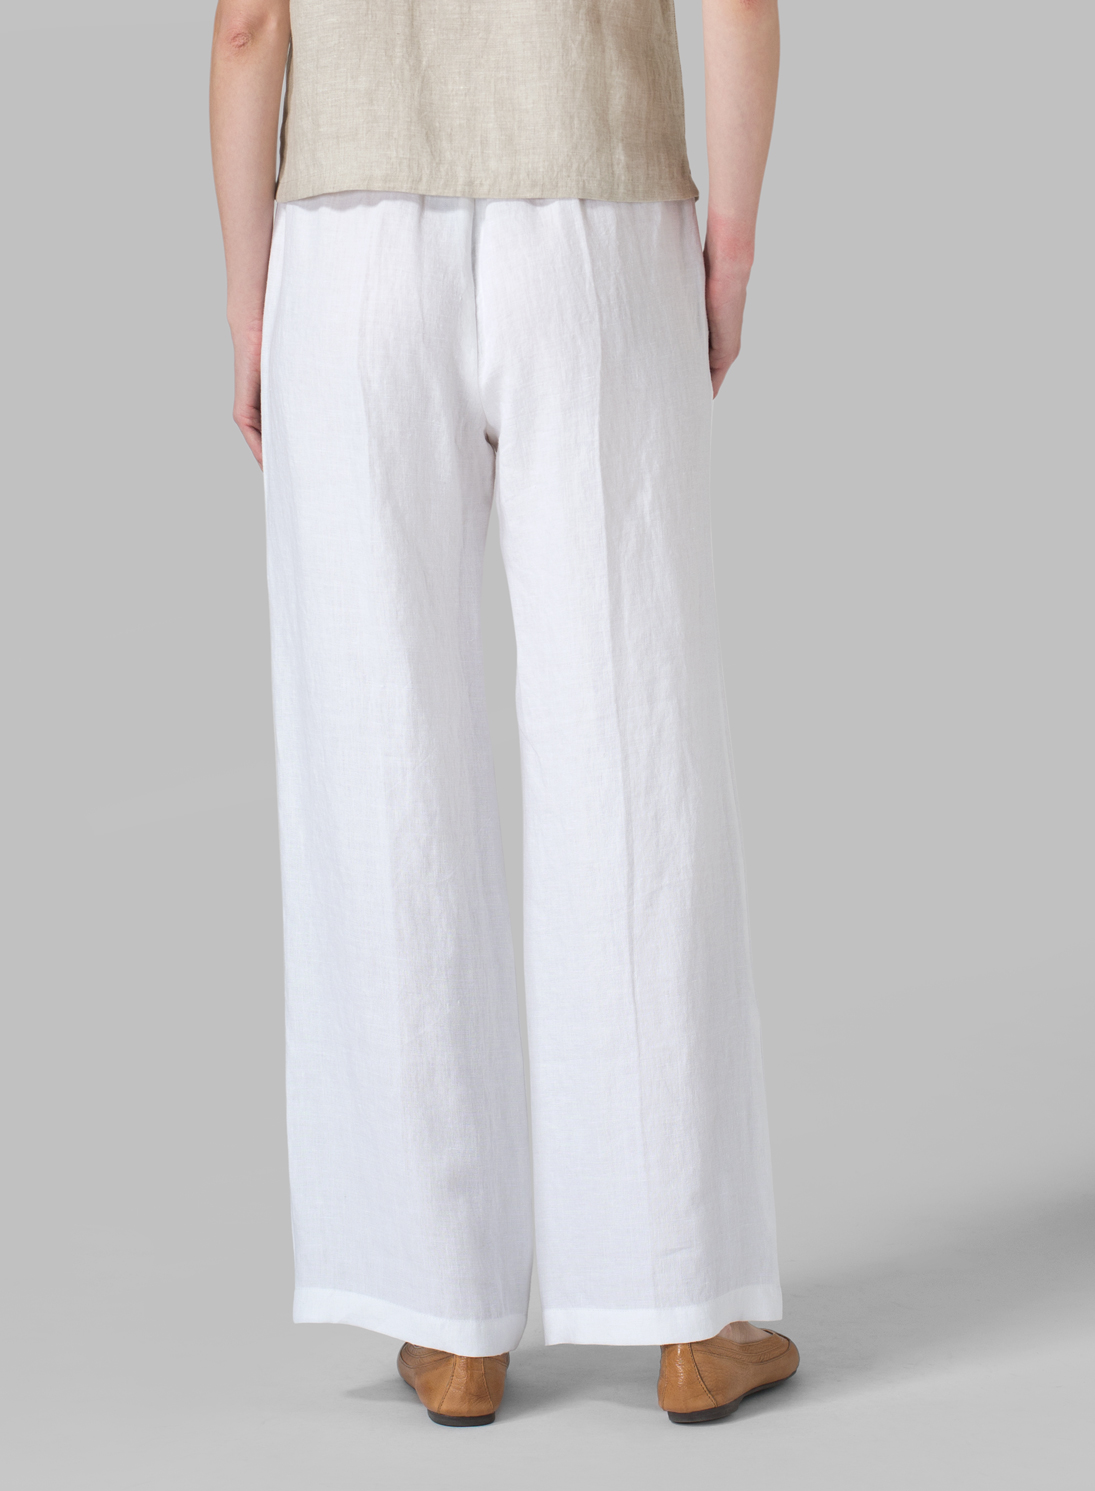 Linen Straight Pull-On Pants - Plus Size